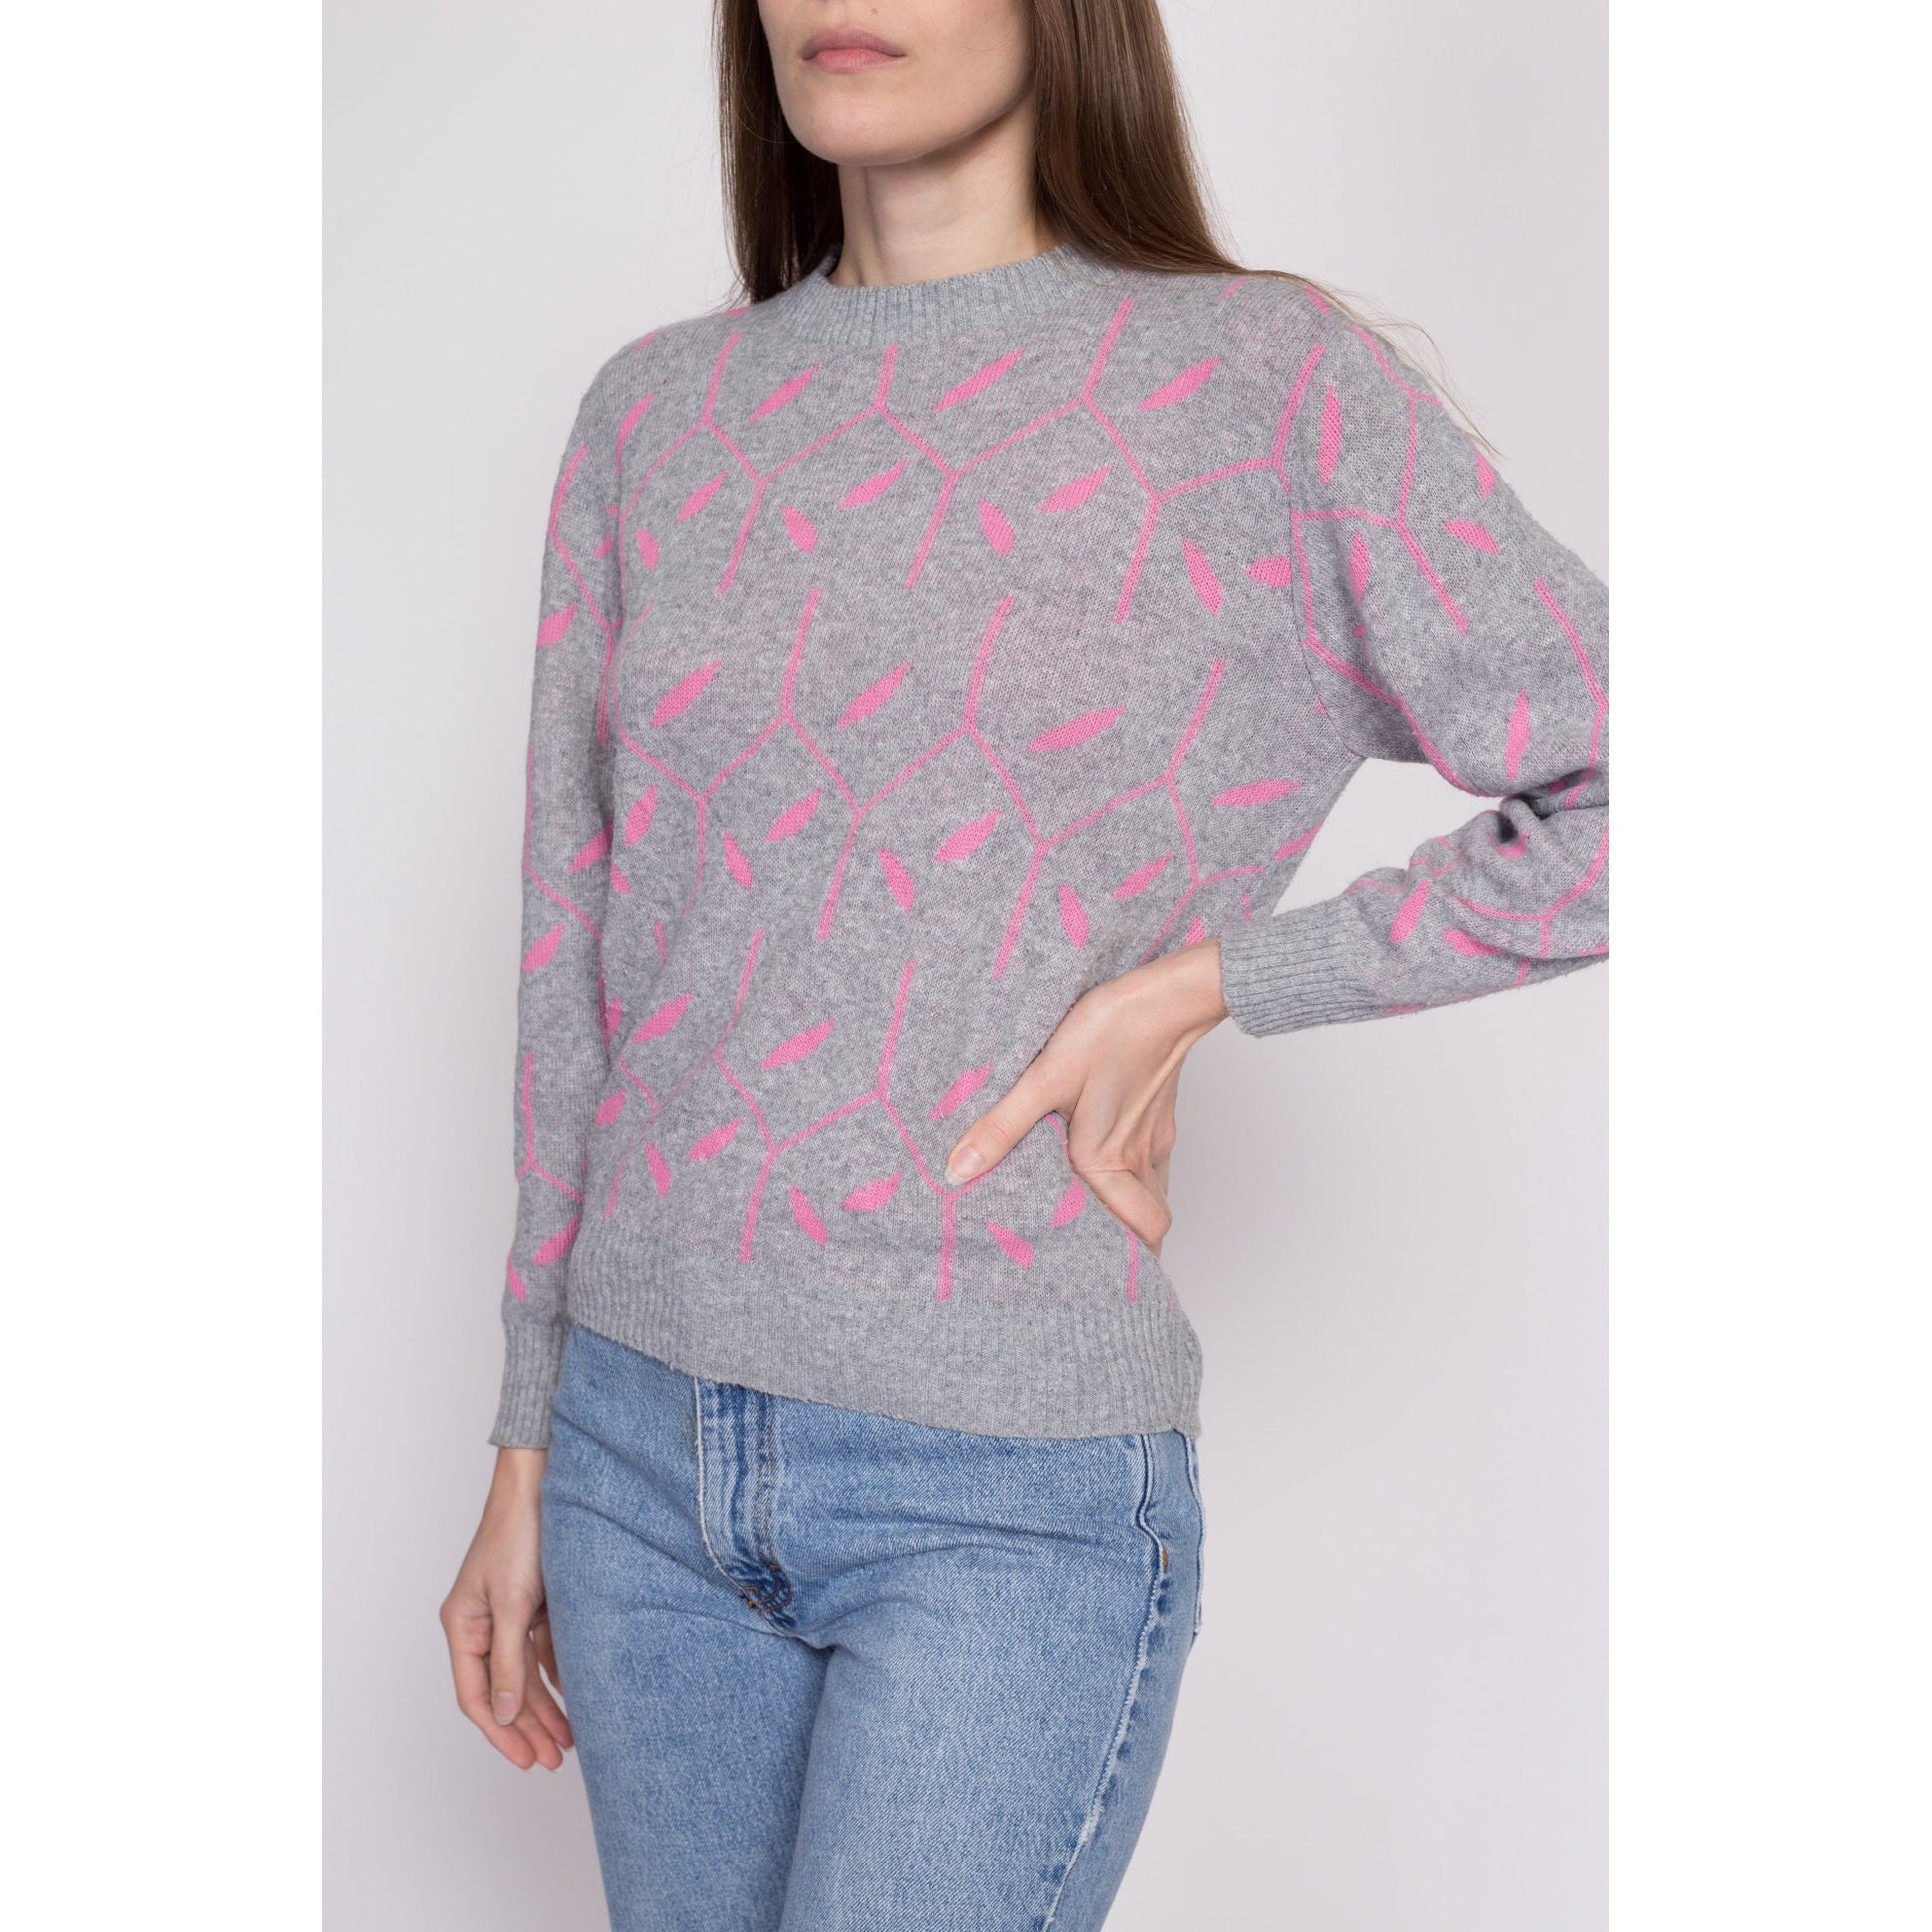 Louis Vuitton, crewneck sweater with neon pink logo - Unique